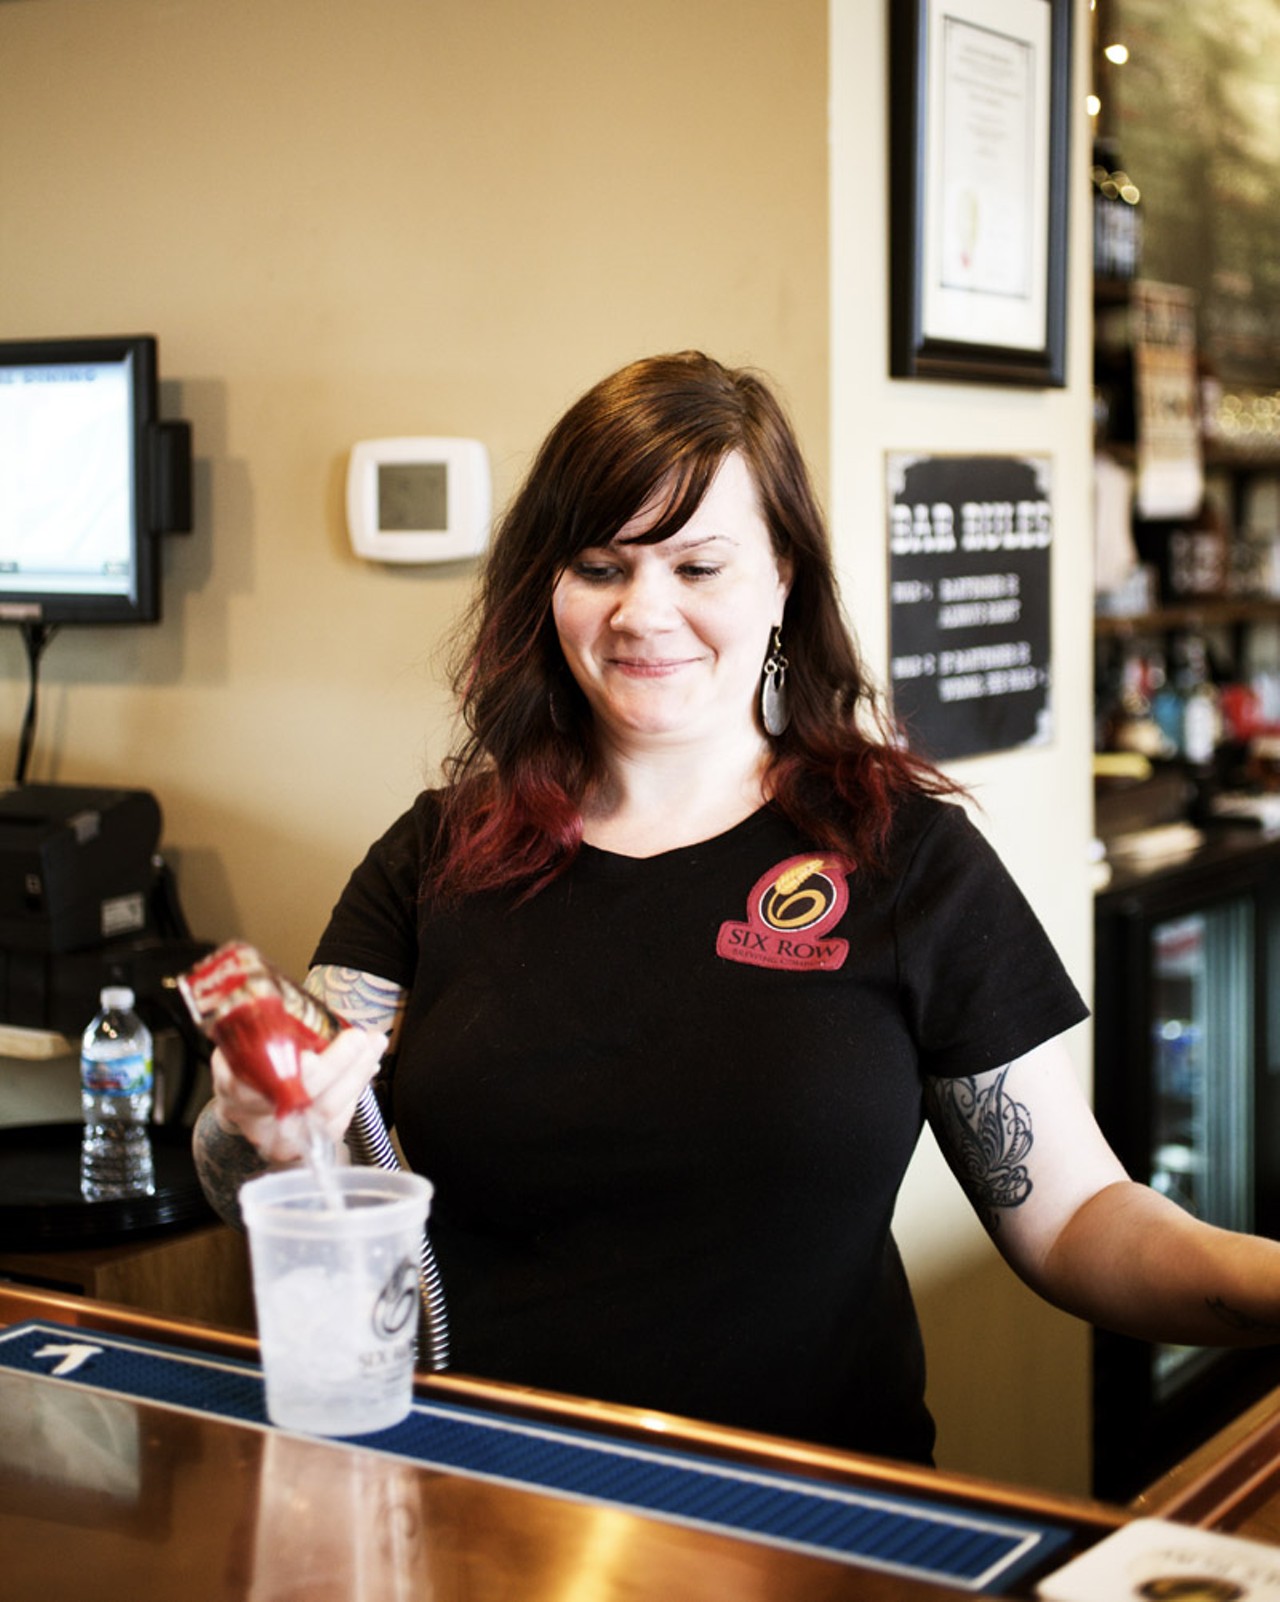 Tara Phelan, bartender at Six Row.